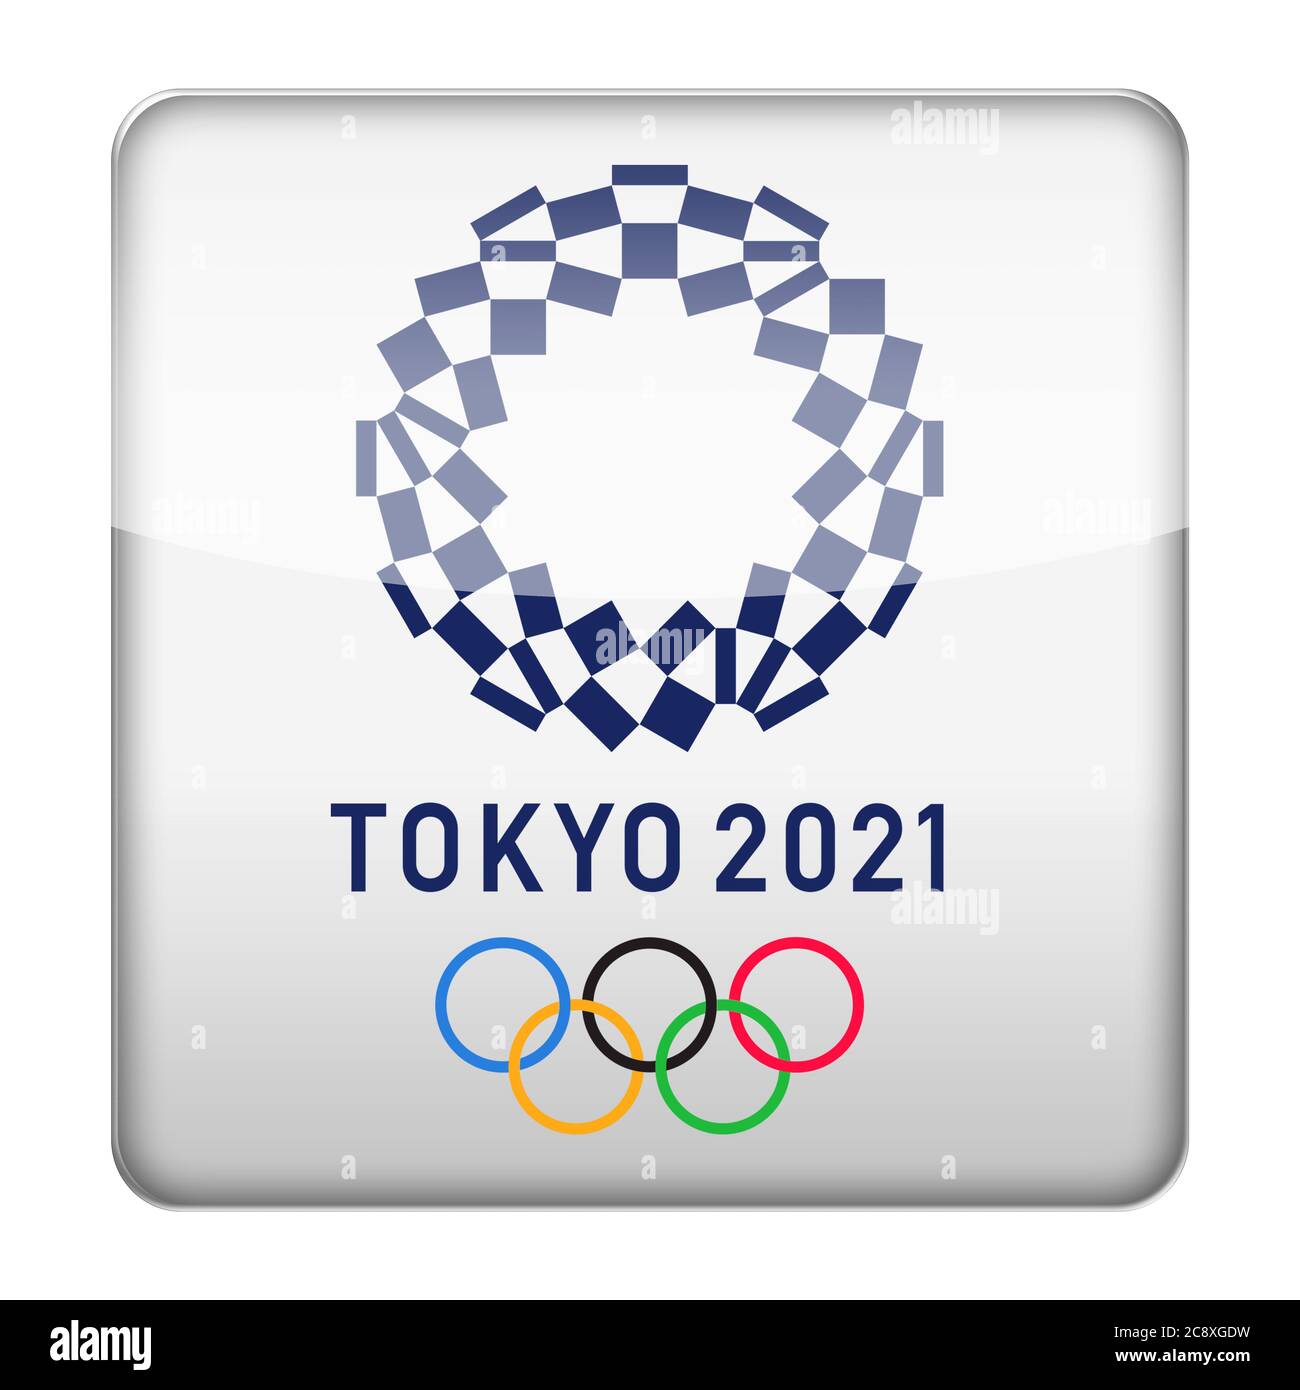 https://c8.alamy.com/compfr/2c8xgdw/jeux-olympiques-a-tokyo-2021-2c8xgdw.jpg